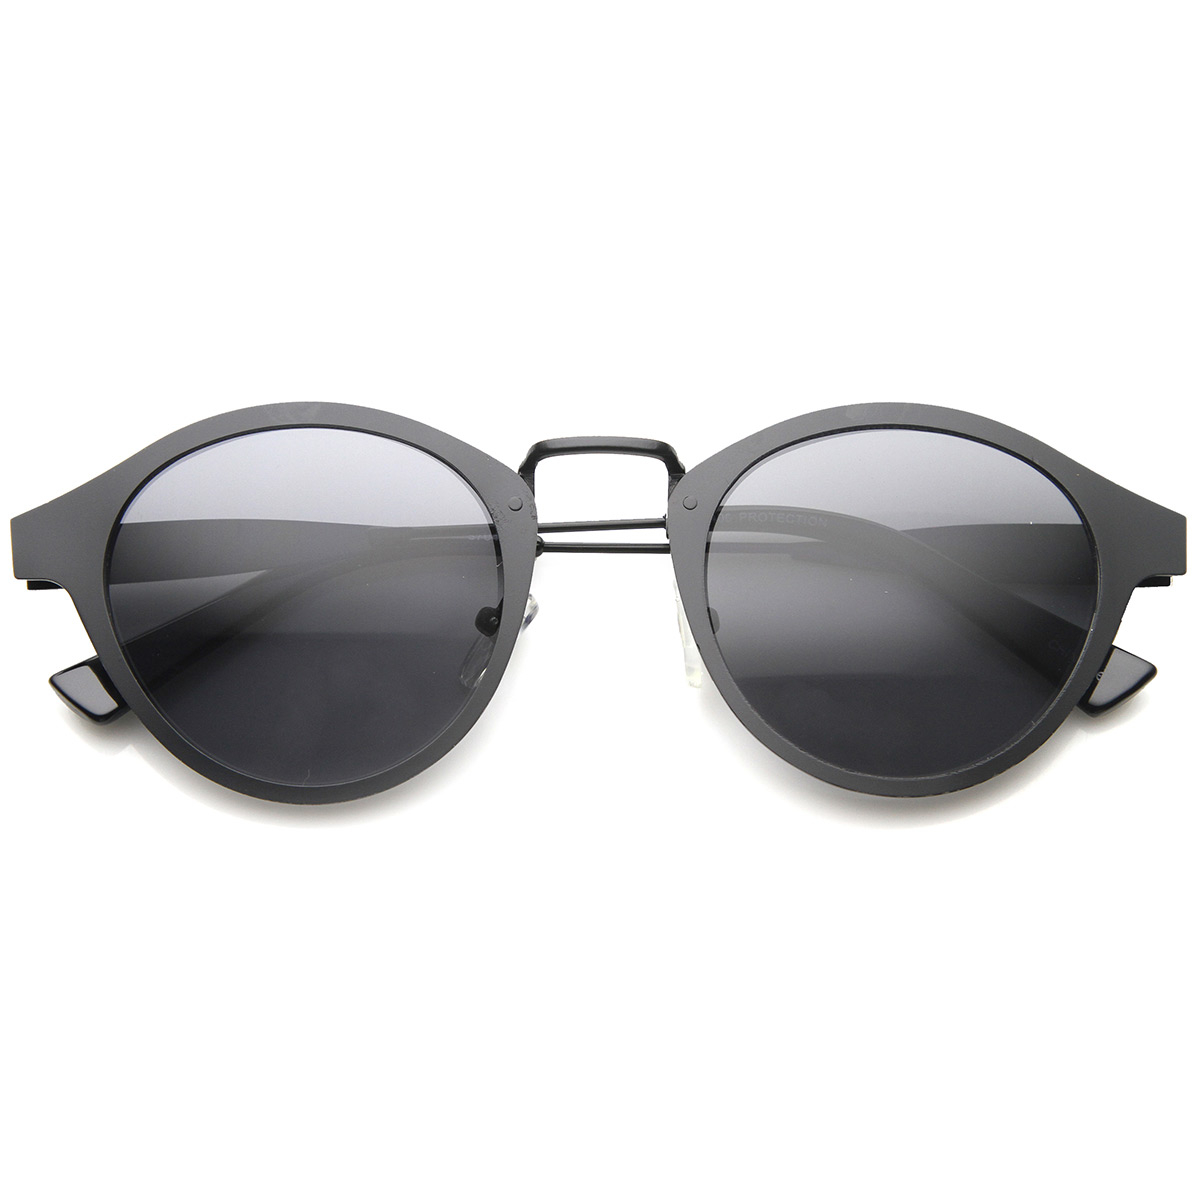 Retro Flat Metal Dapper P-3 Horned Rim Sunglasses 9736 - Gold Brown